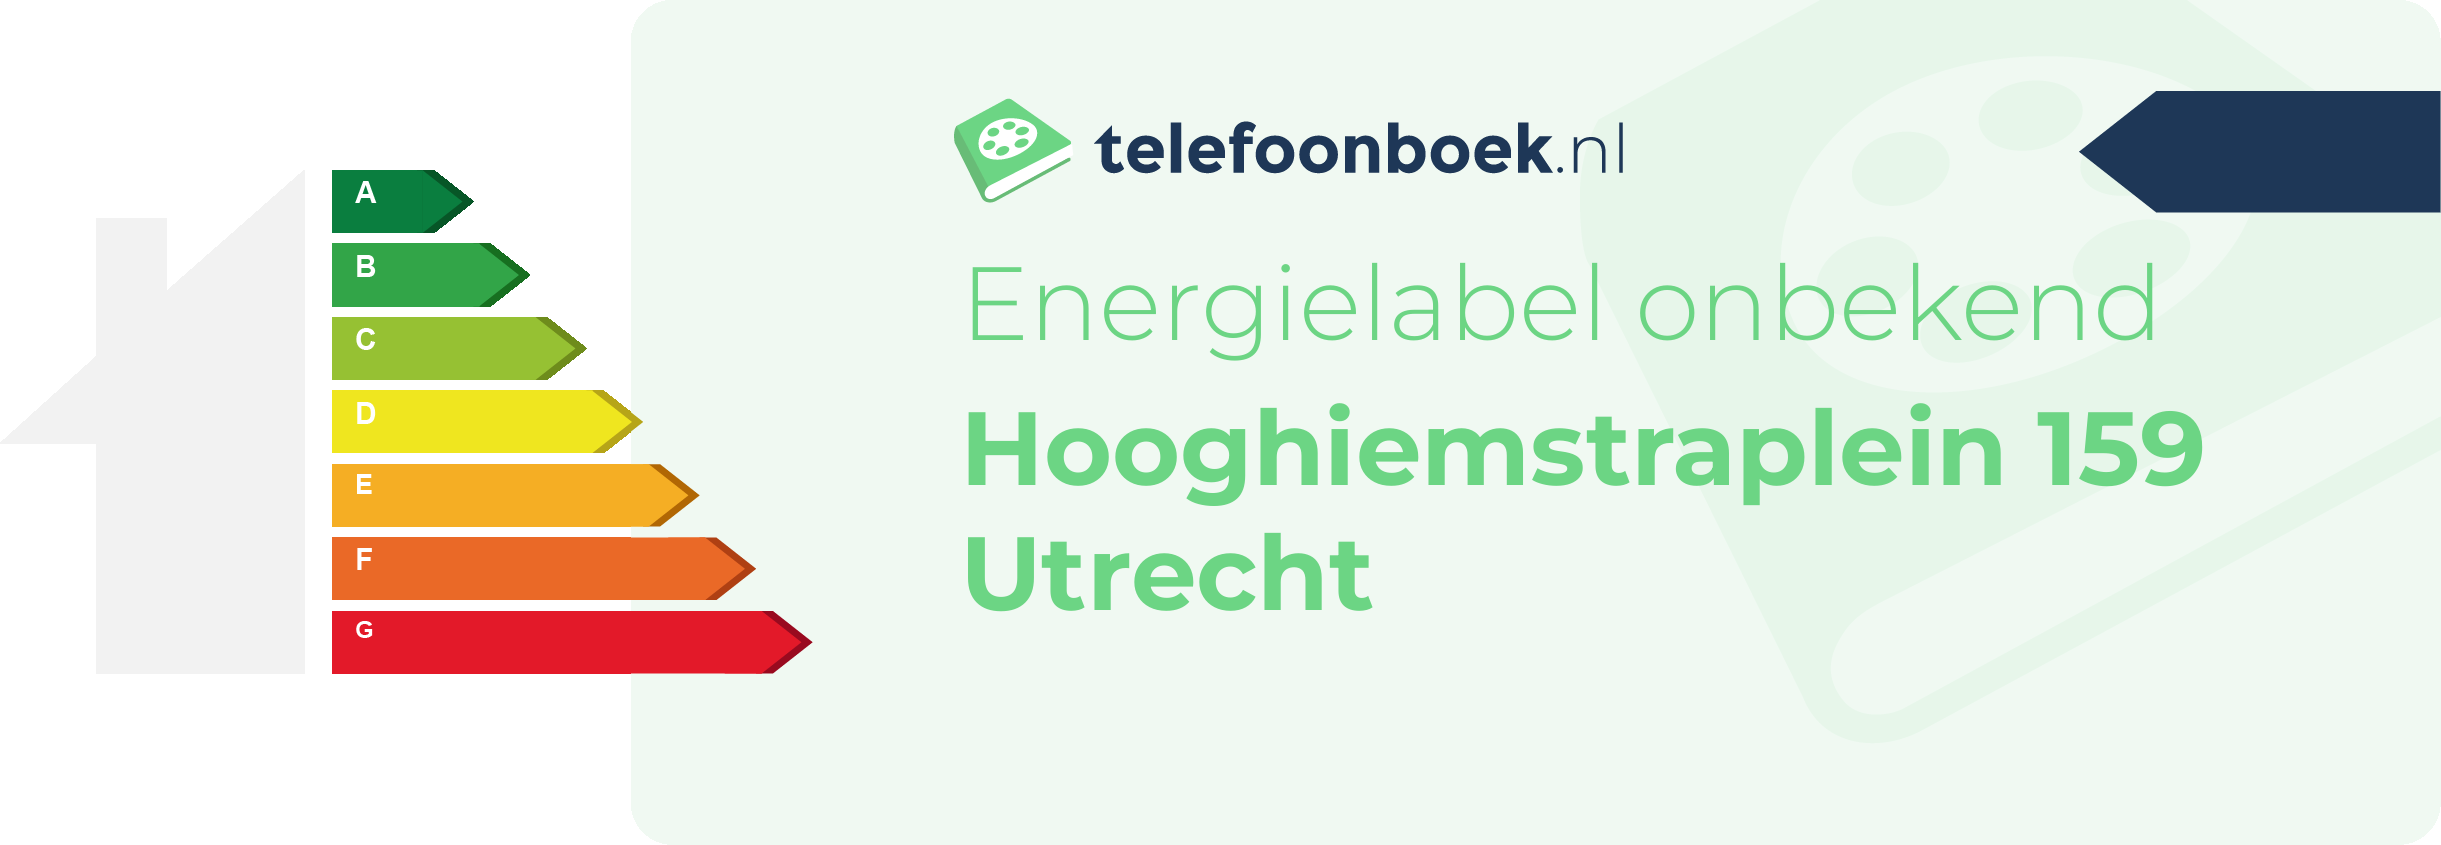 Energielabel Hooghiemstraplein 159 Utrecht